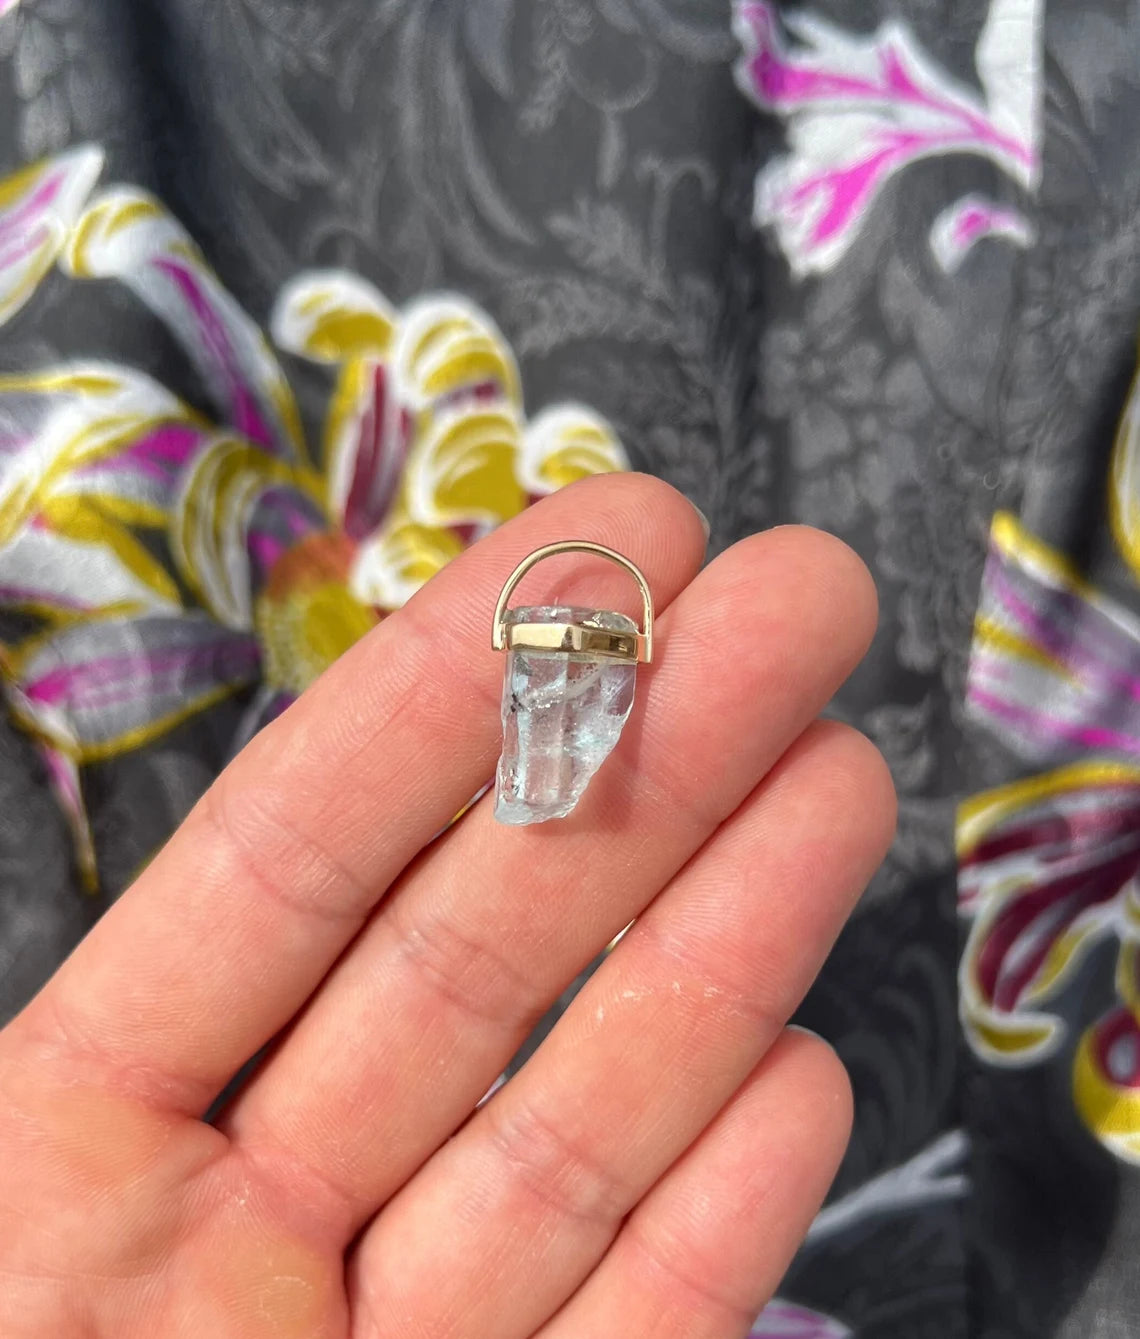 Aquamarine rough crystal pendant set in solid 14k yellow gold